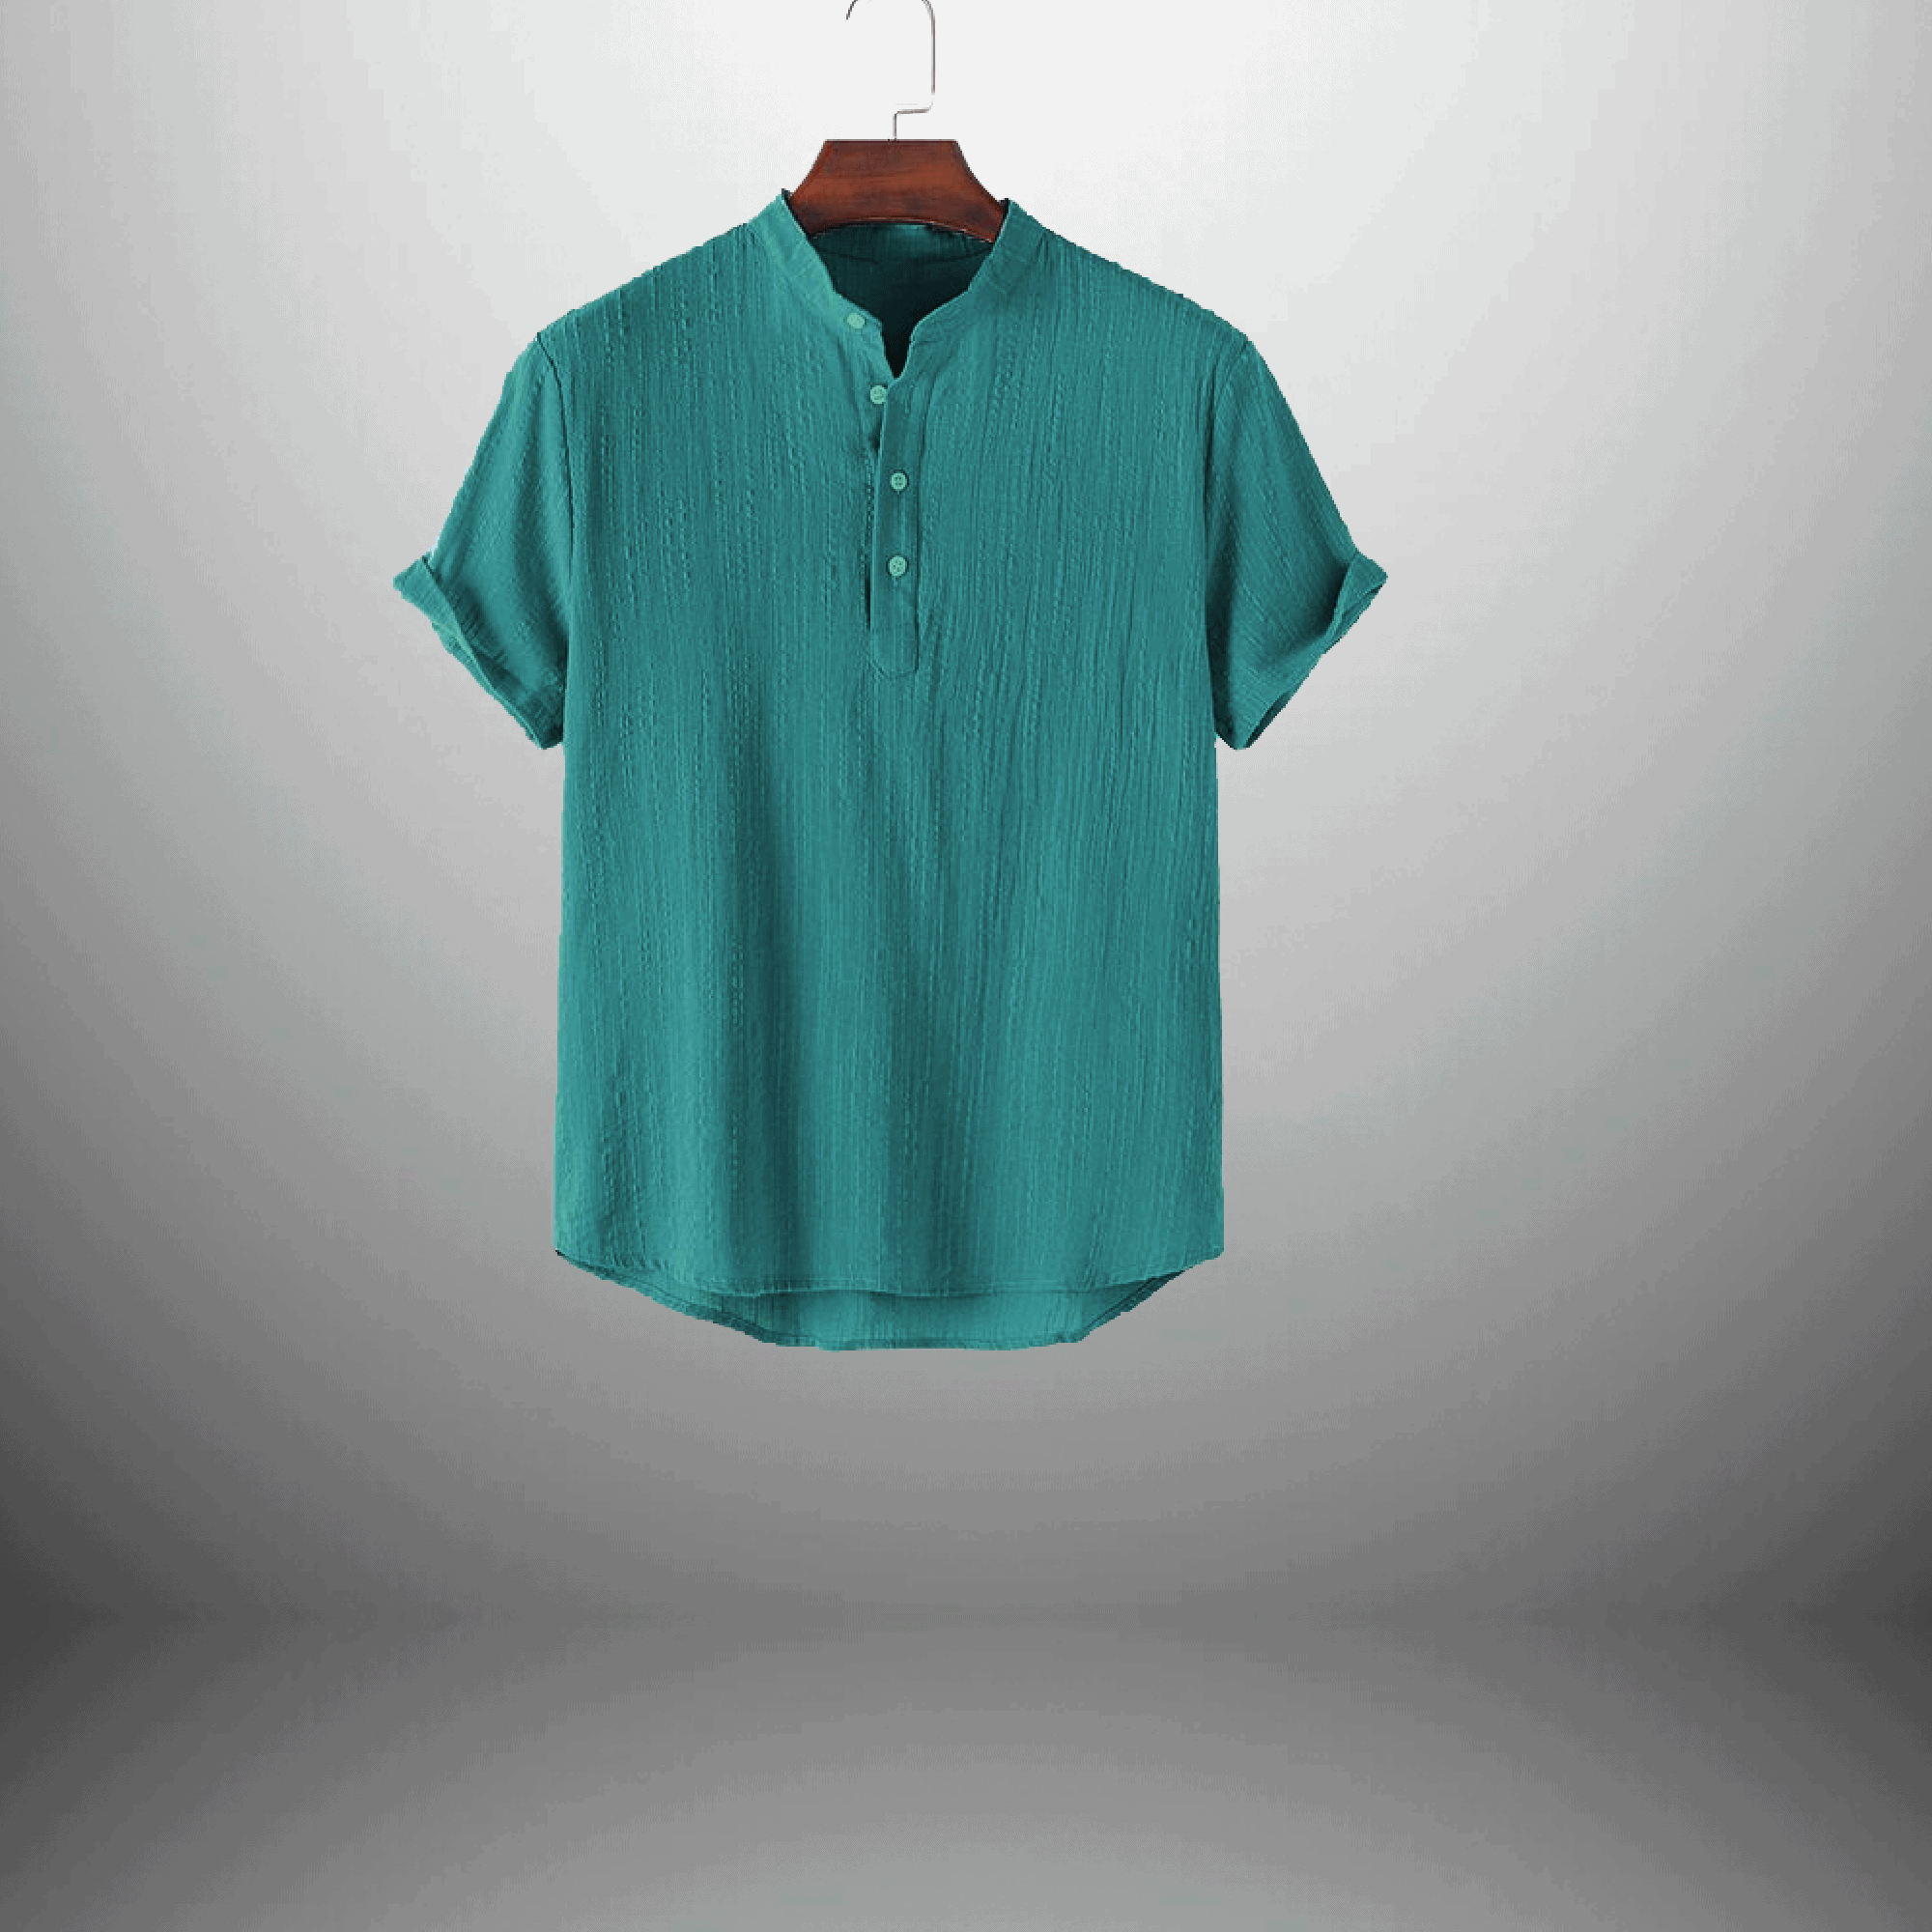 Men's teal blue Half sleeve kurta style shirt-RMS007